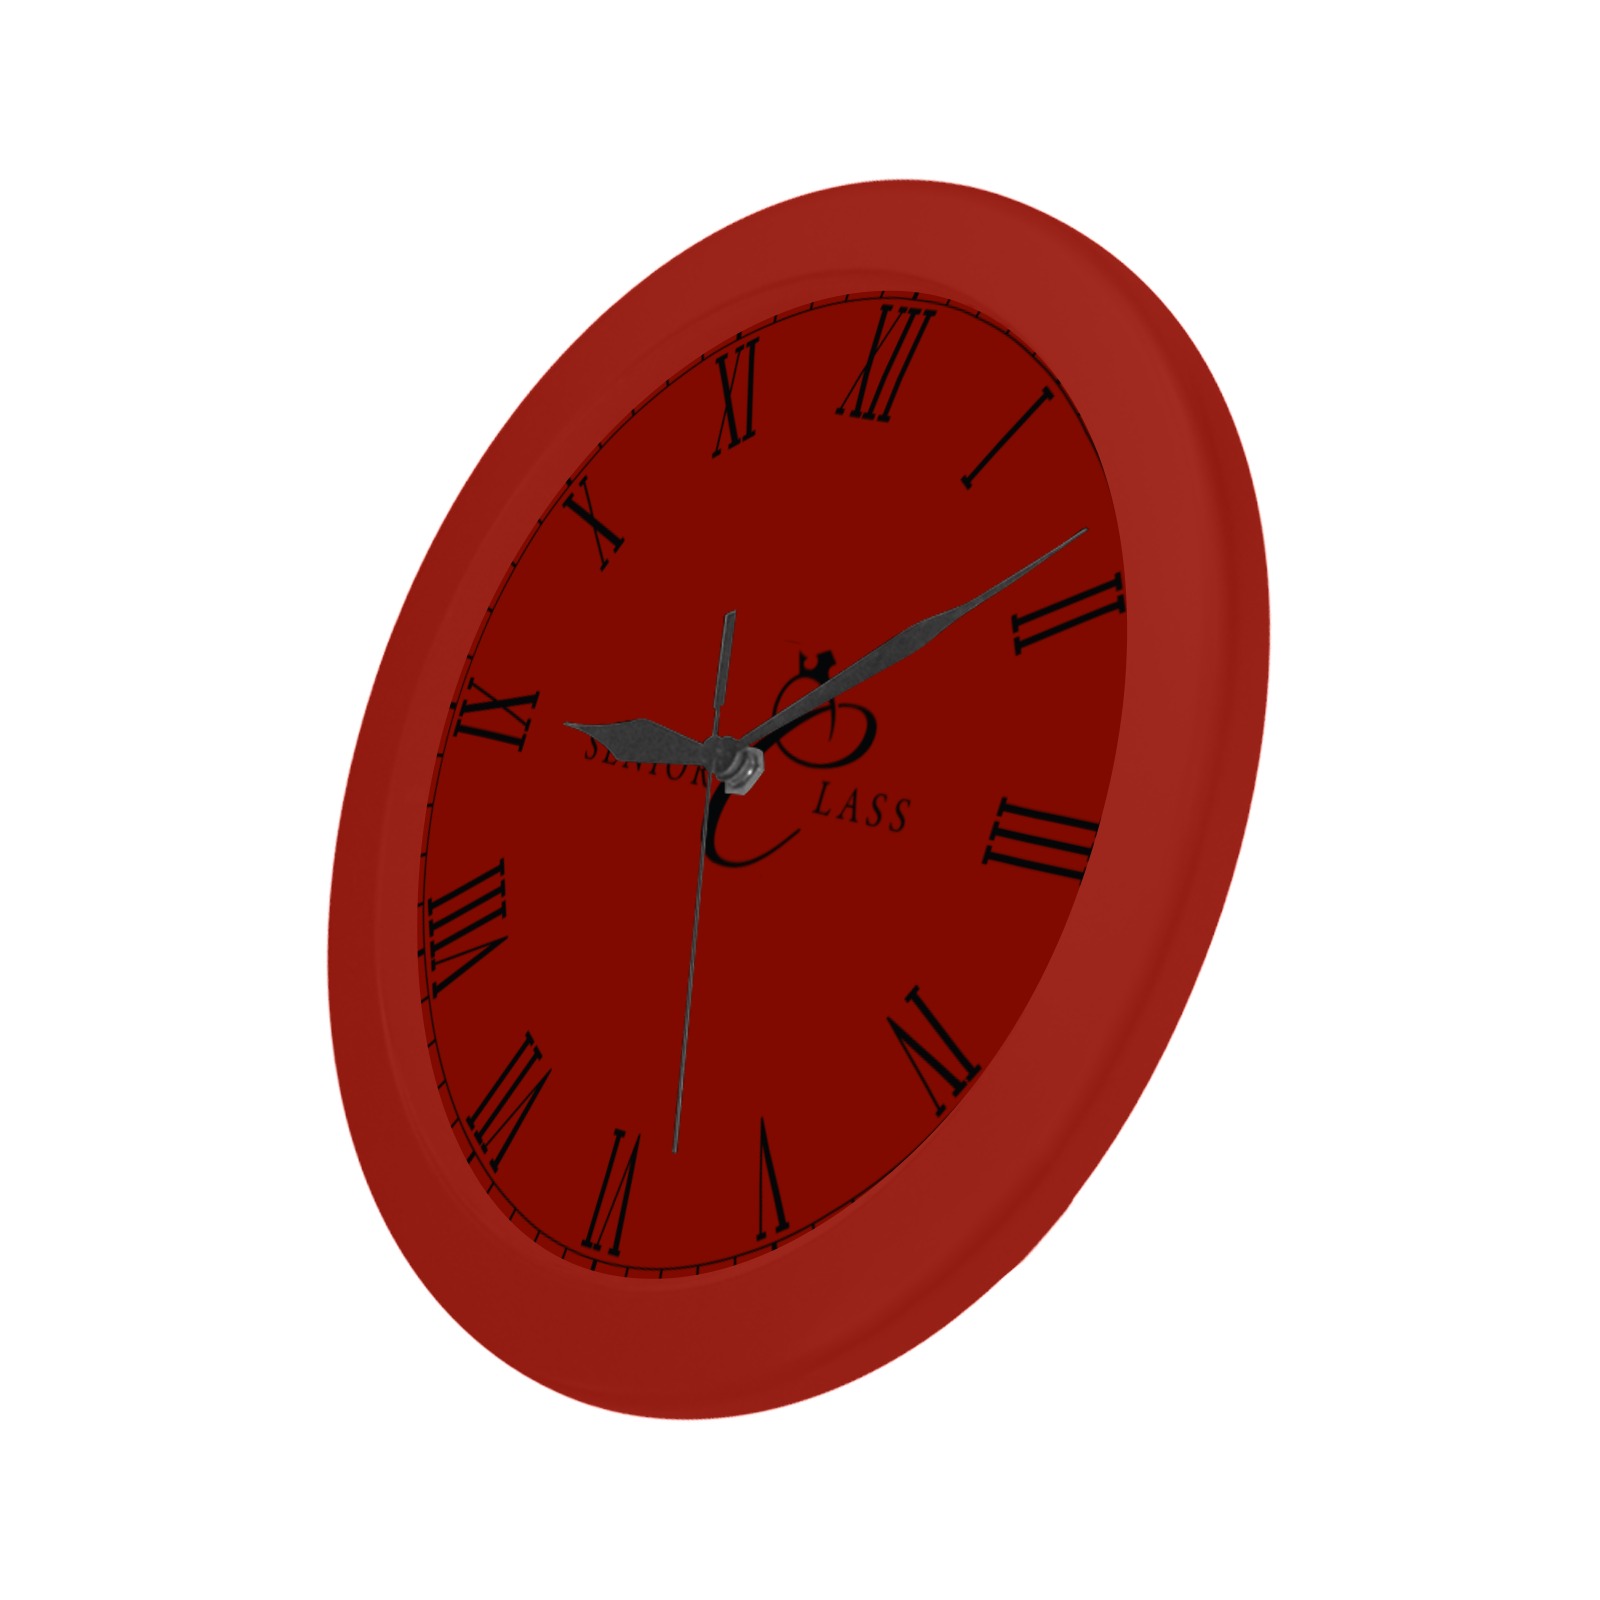 Senior Class Legacy Red Circular Plastic Wall clock